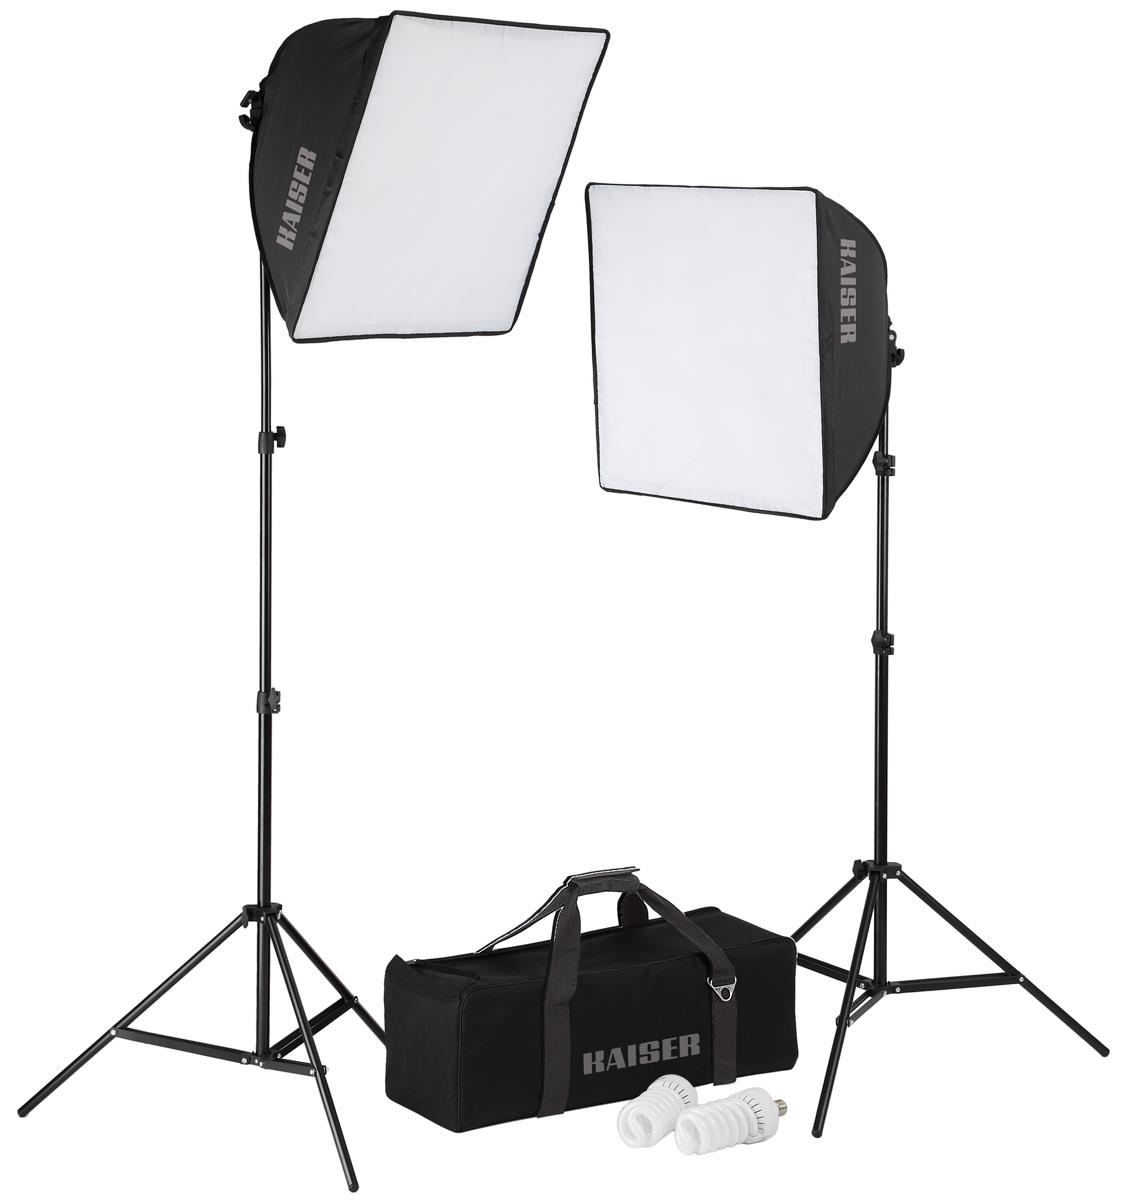 Kaiser Fototechnik Studiolight E70 Kit mit je 2 Softboxen 50x50 cm mit E27-Fassung und Neigegelenk, 